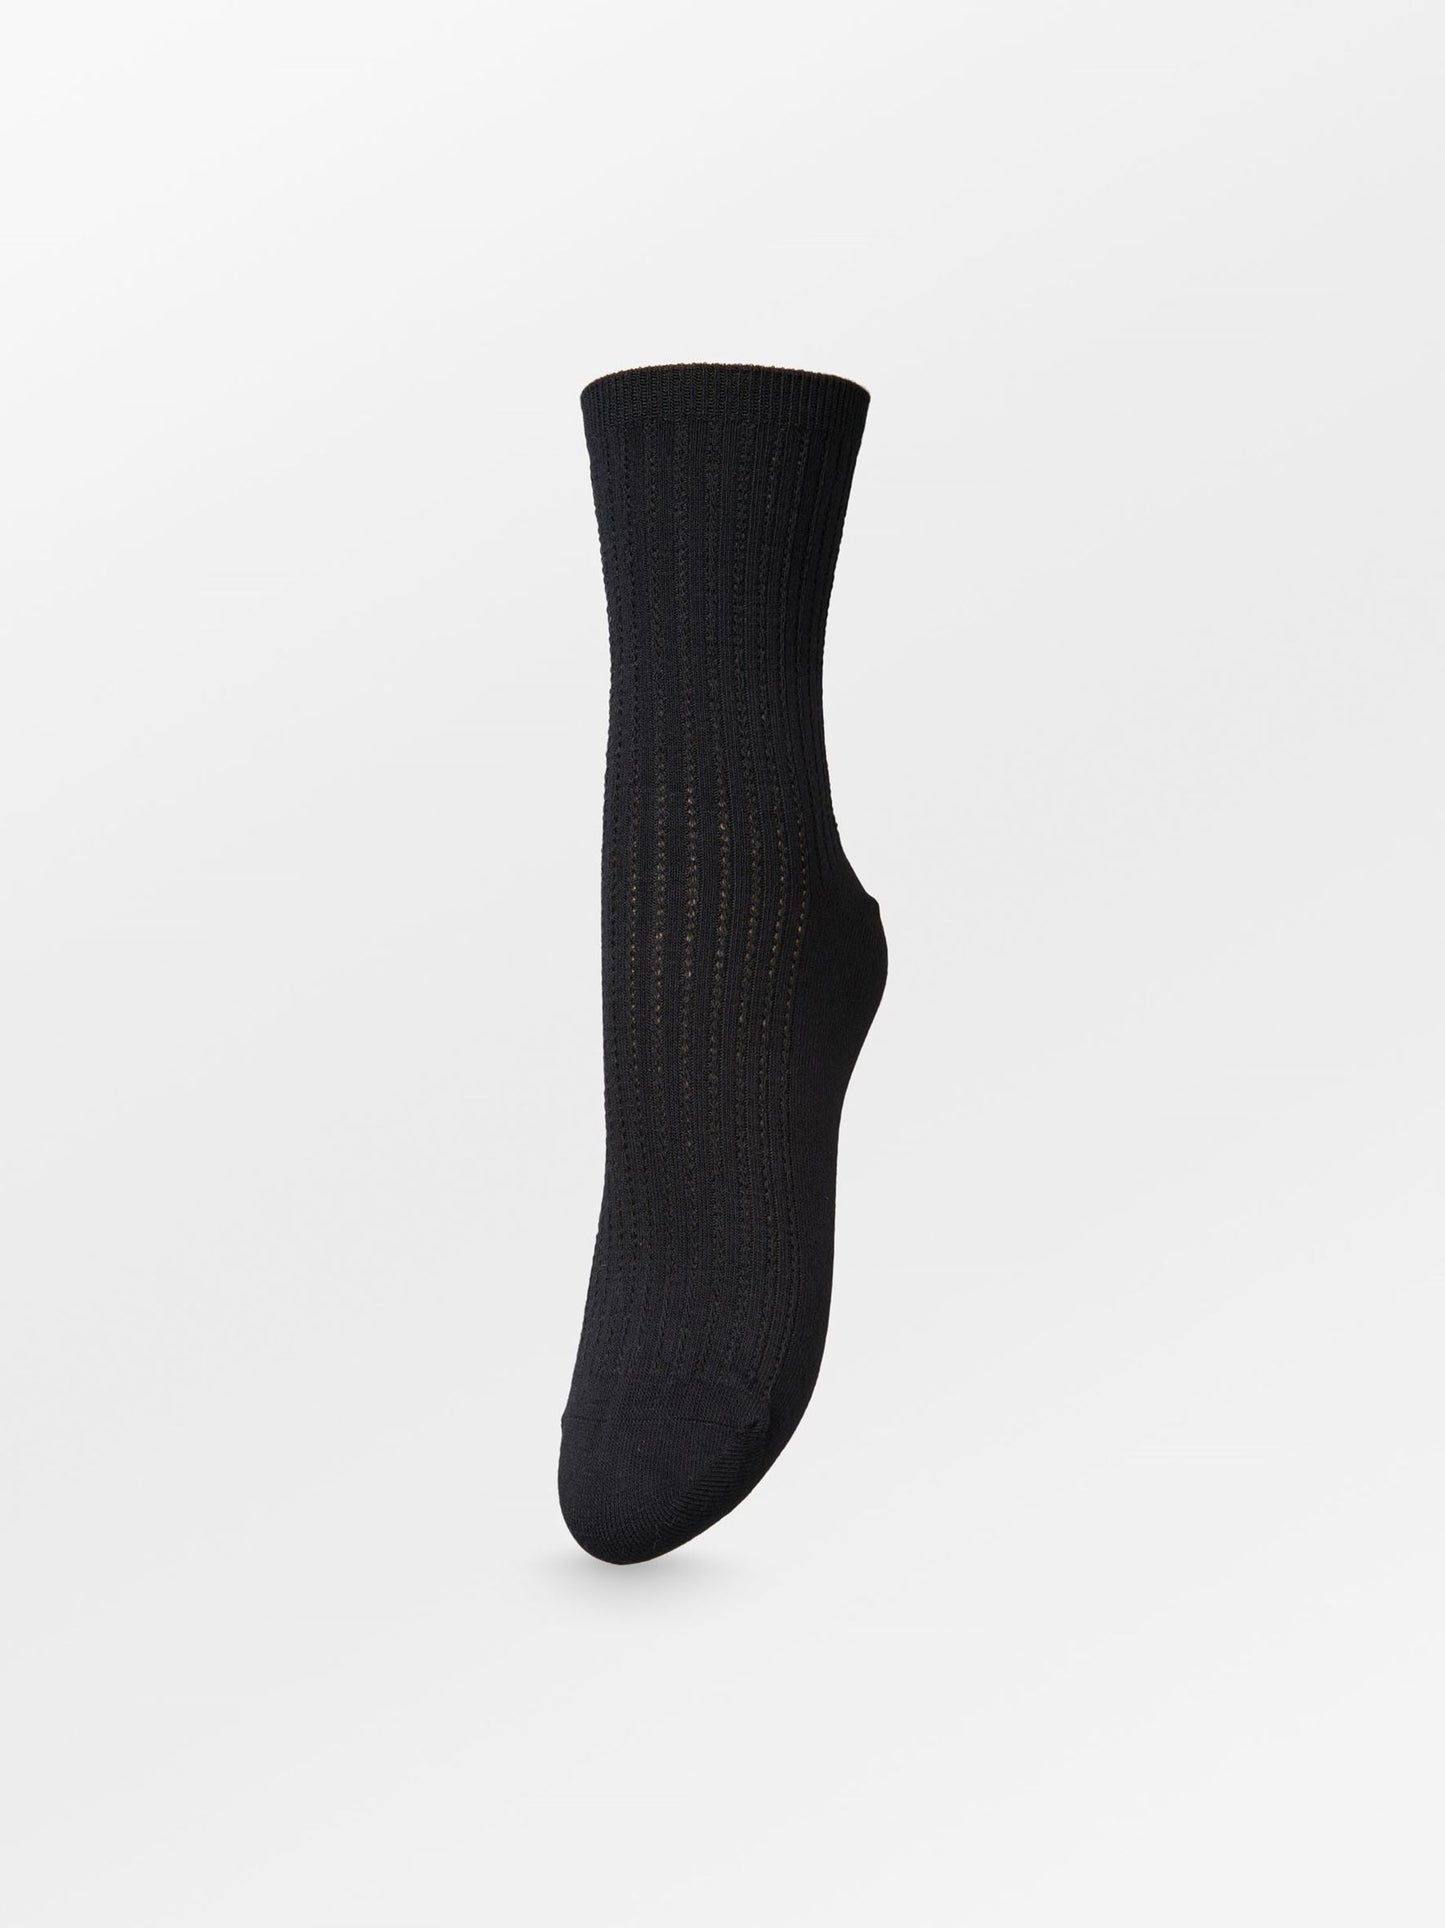 Becksöndergaard, Helga Crochet Sock  - Black, socks, archive, archive, sale, sale, socks